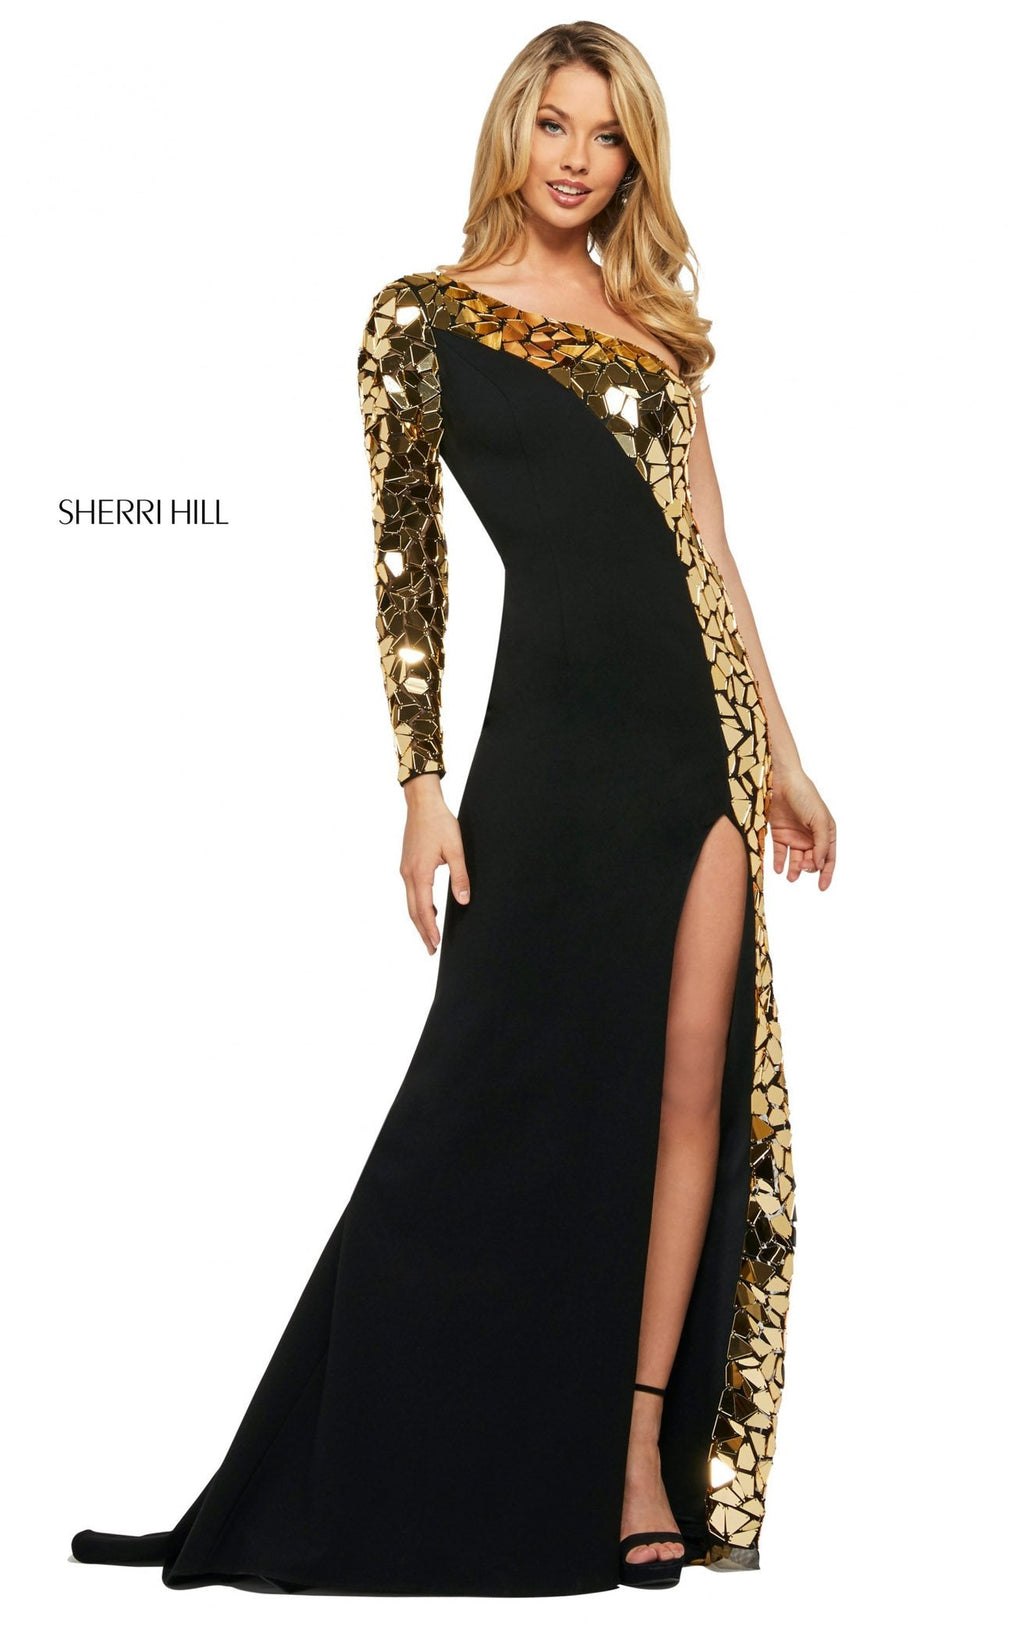 sherri hill black and gold dress